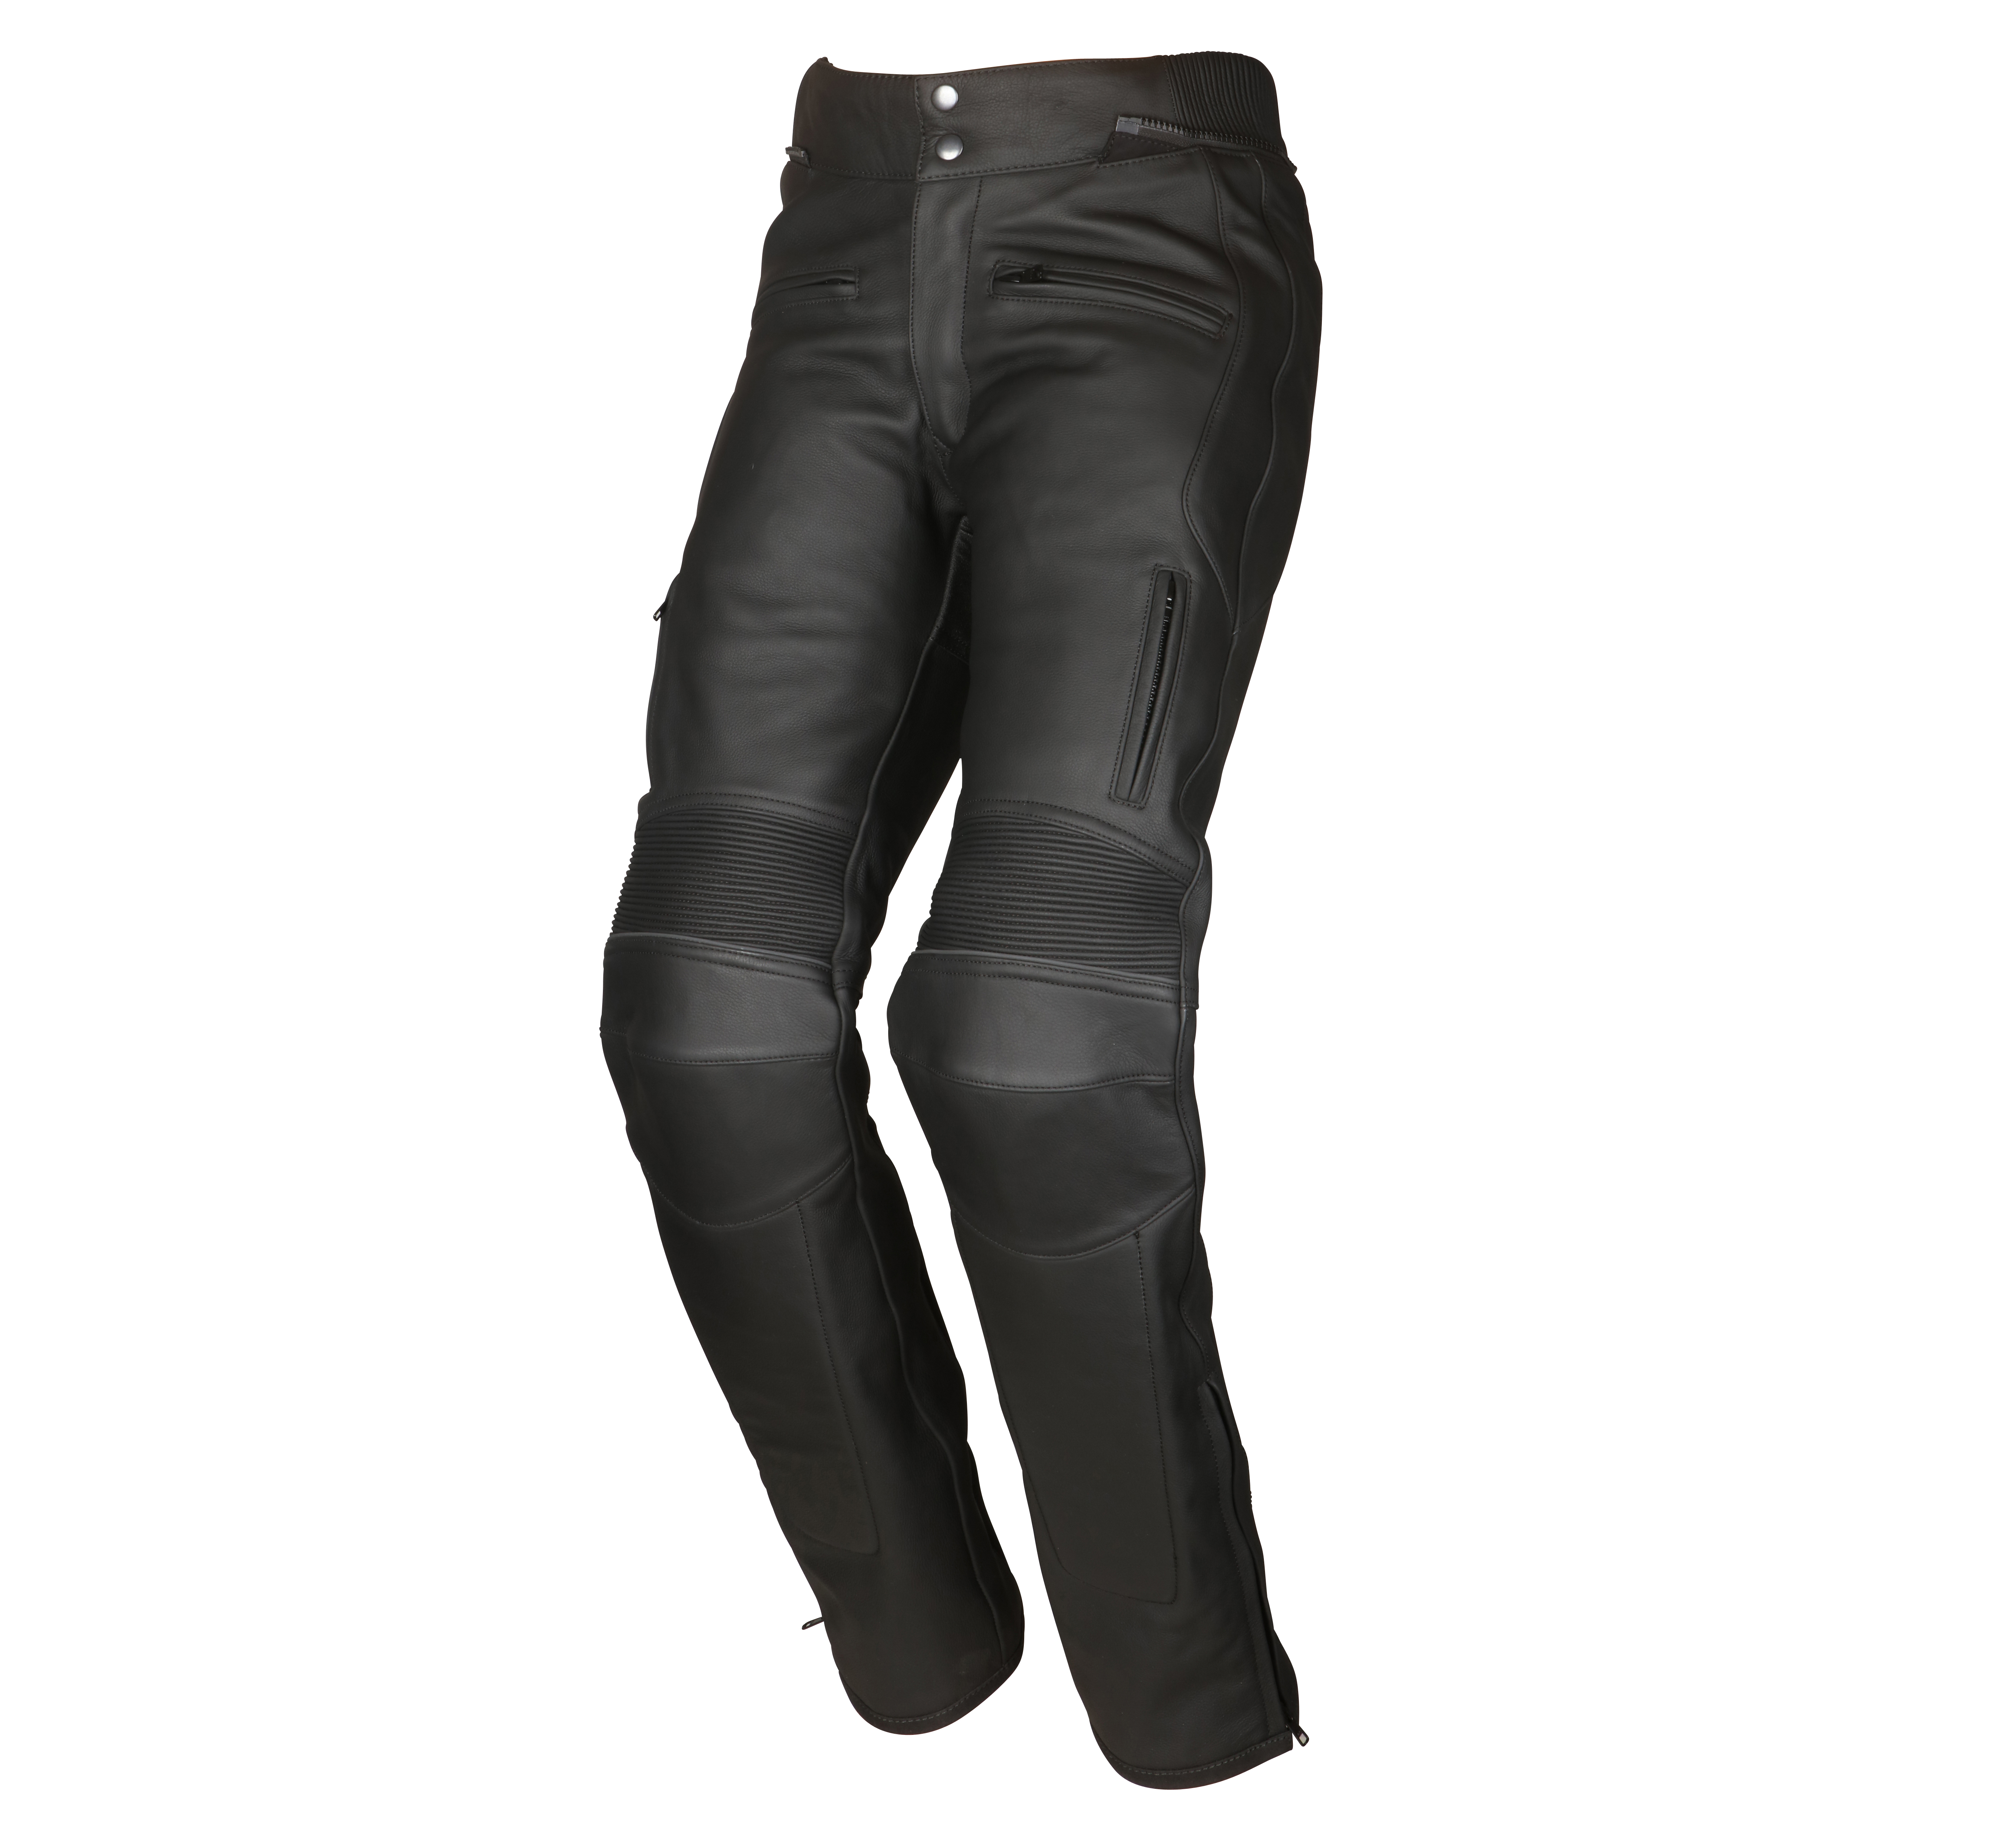 MODEKA Helena Lady Pants Black - Women's leather motorcycle pants